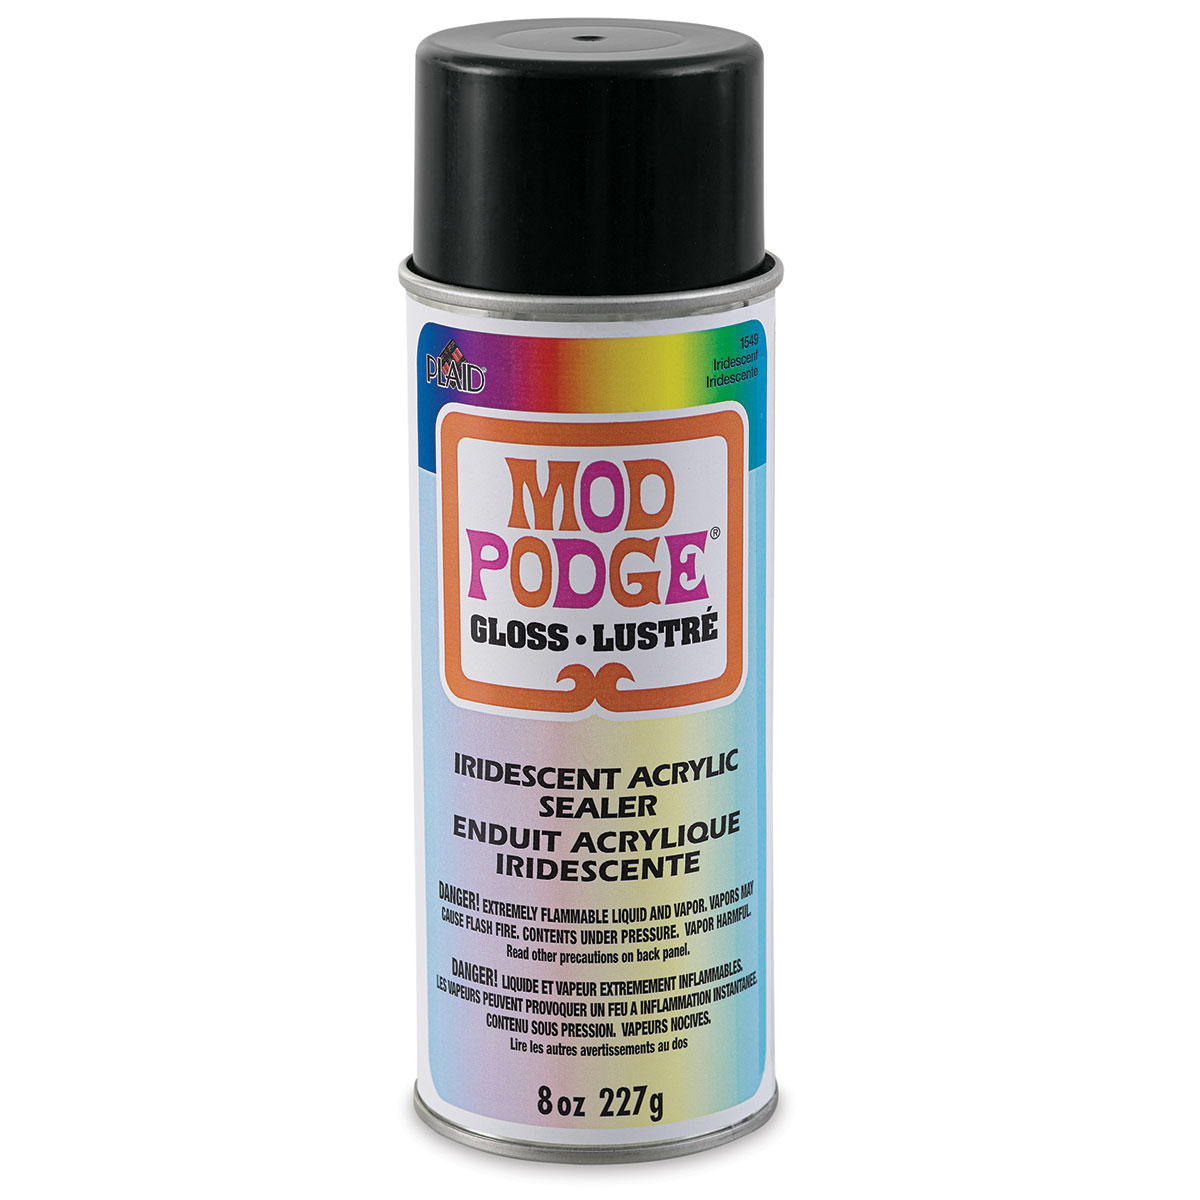 Plaid Mod Podge Ultra Spray Glue